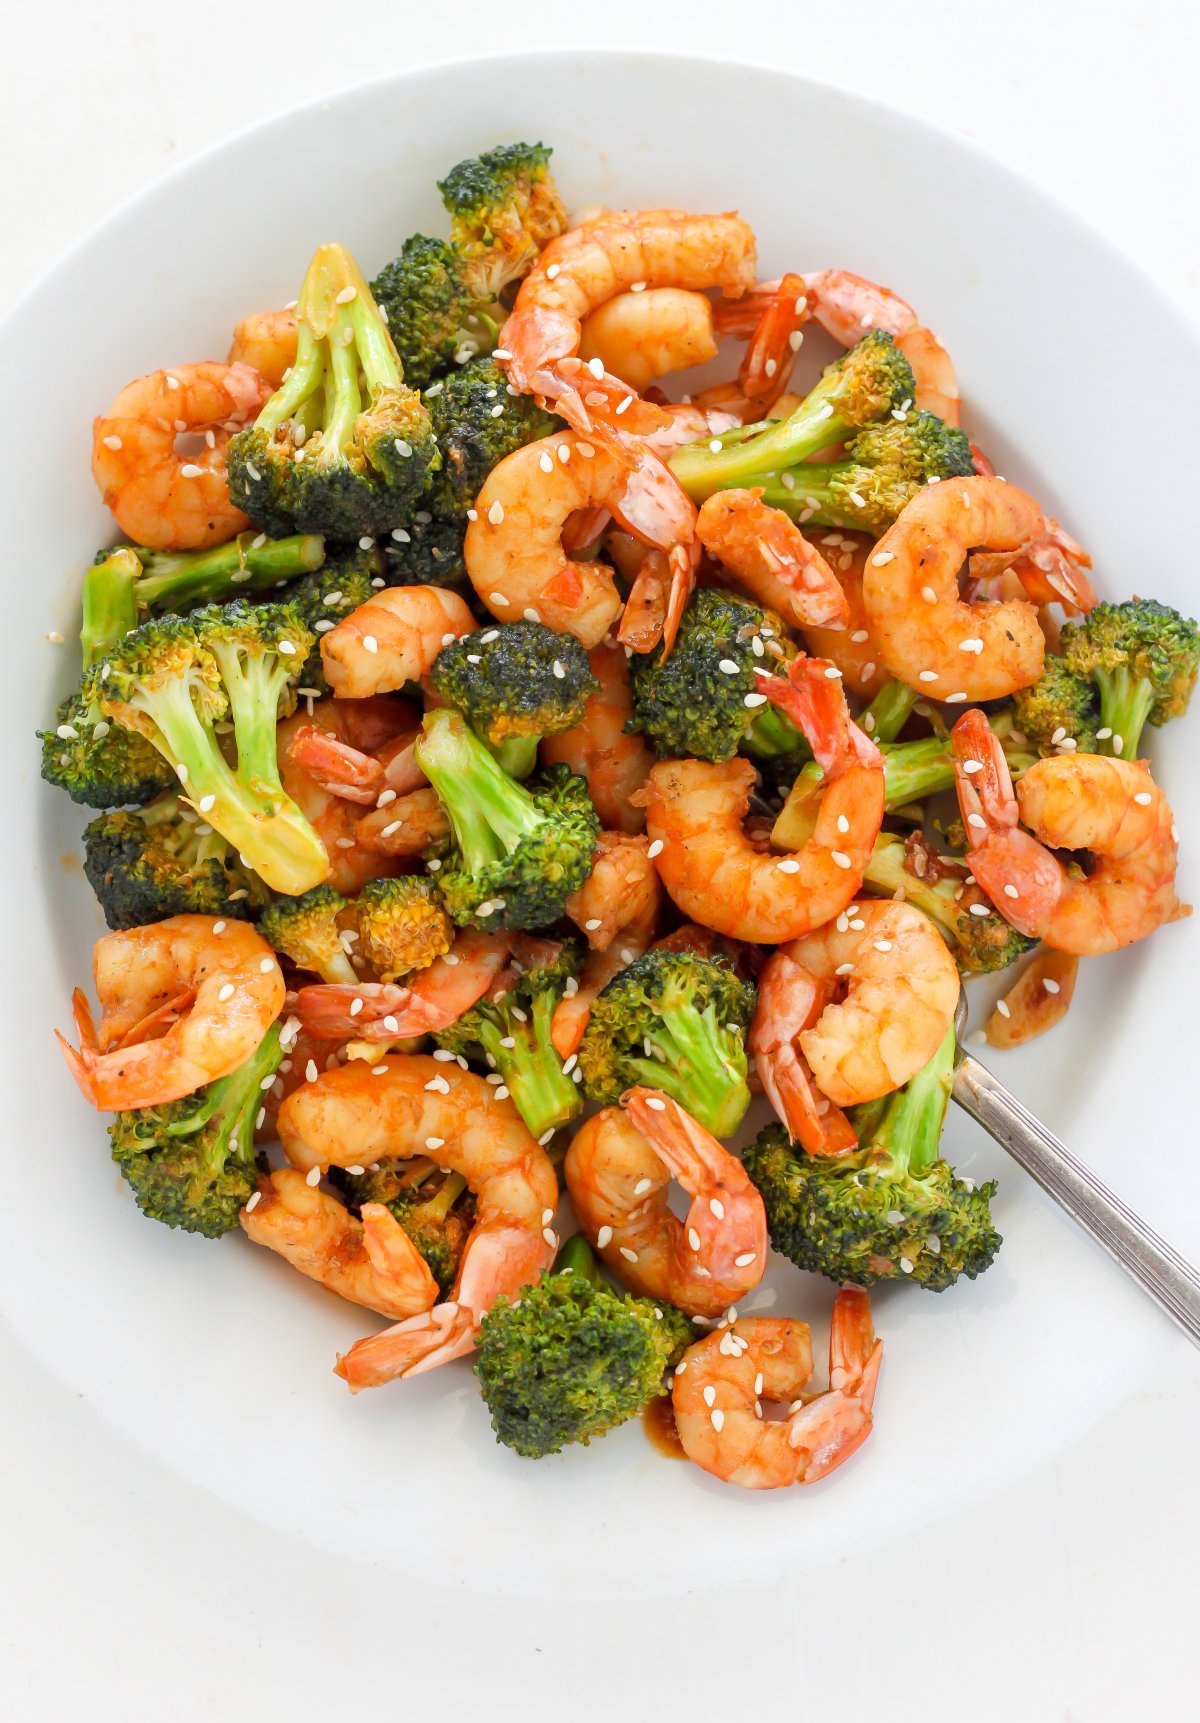 20-Minute Skinny Sriracha Shrimp and Broccoli - Baker by Nature